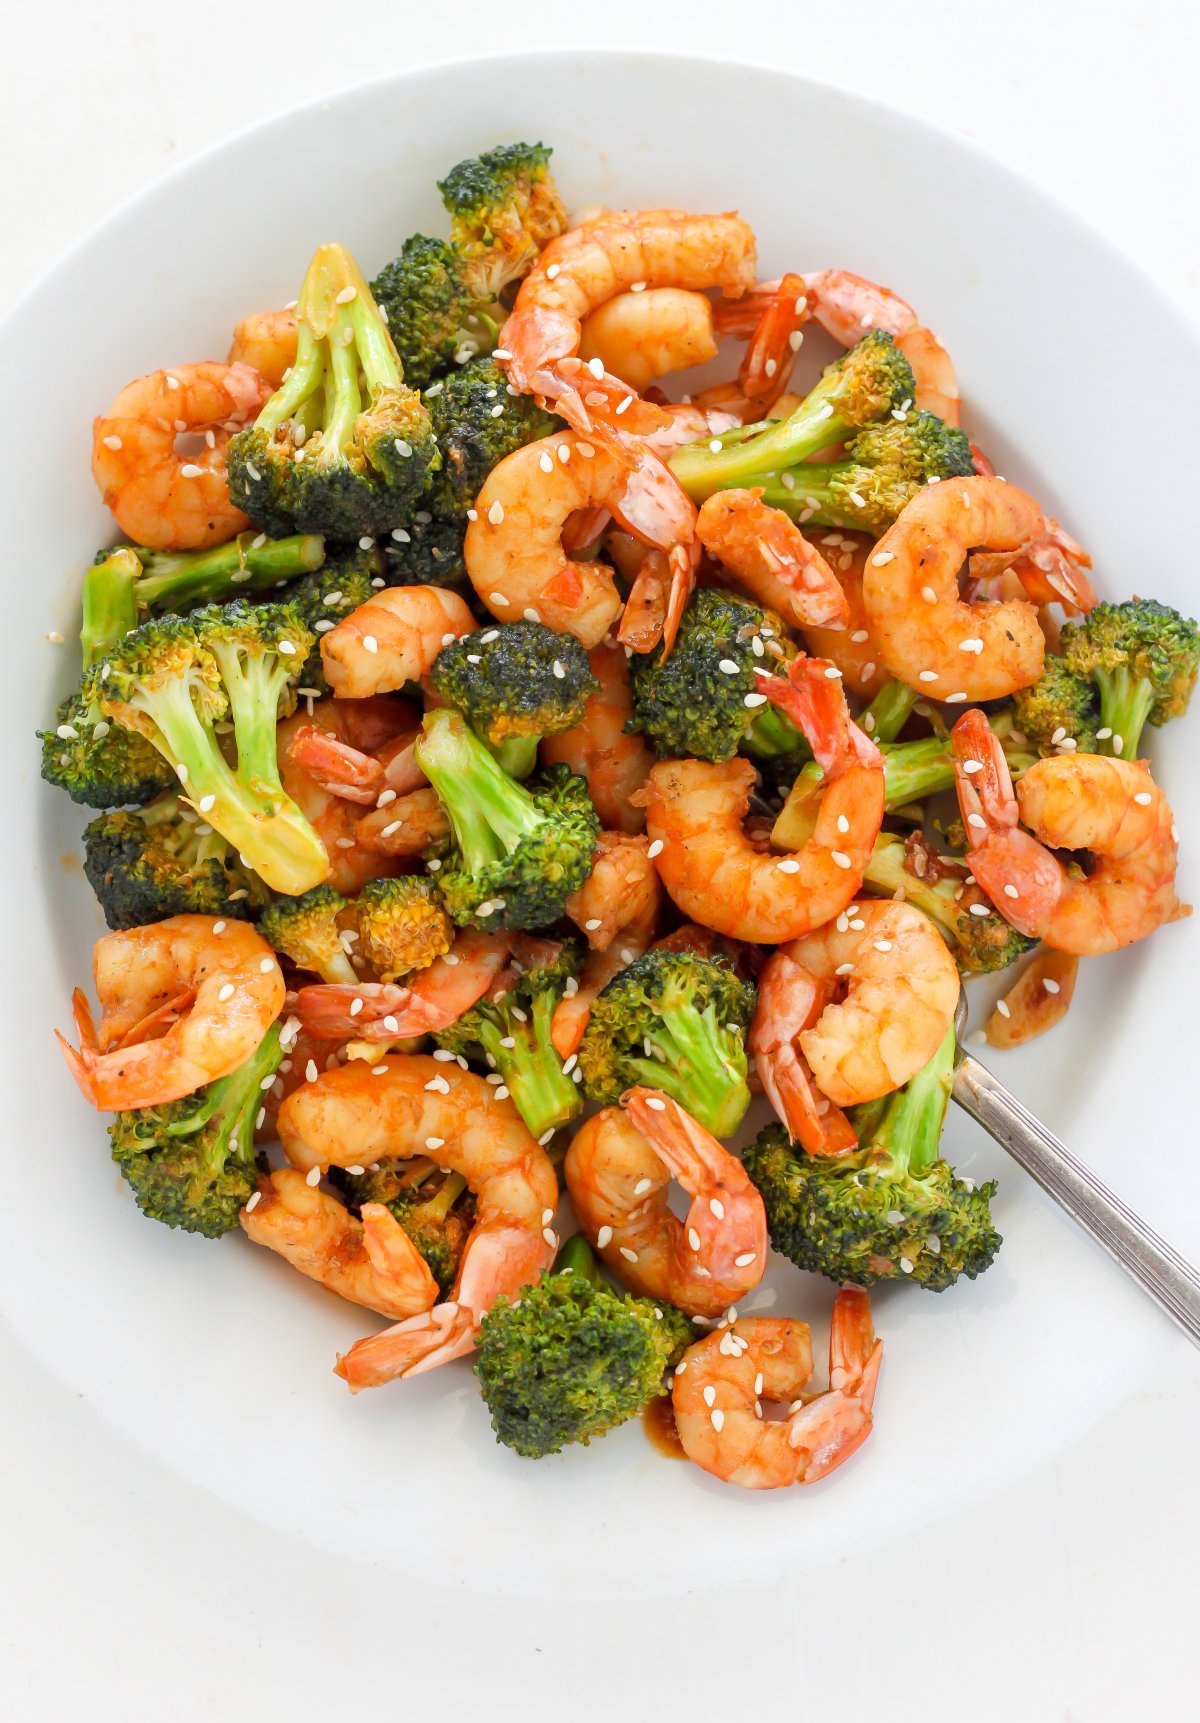 20-Minute Skinny Sriracha Shrimp and Broccoli - Baker by Nature